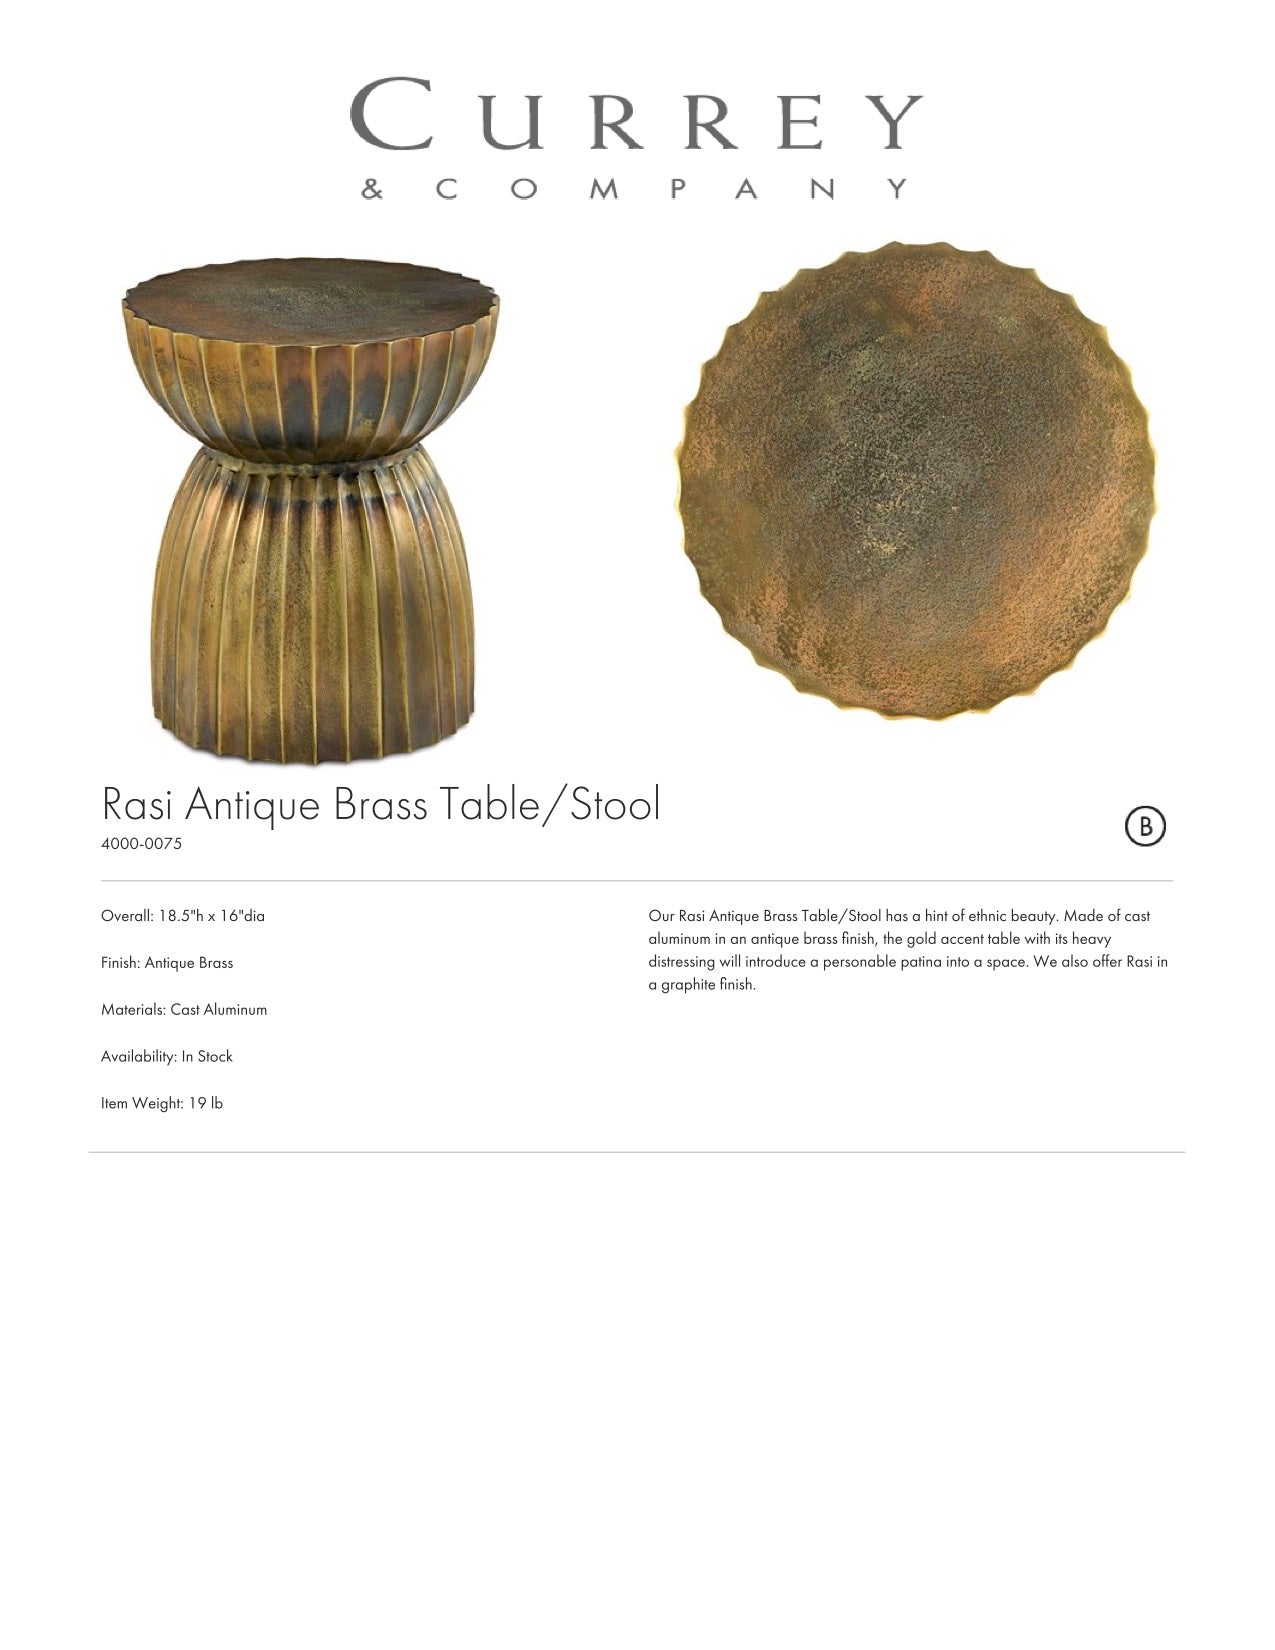 Currey & Company Rasi Antique Brass Table Tearsheet